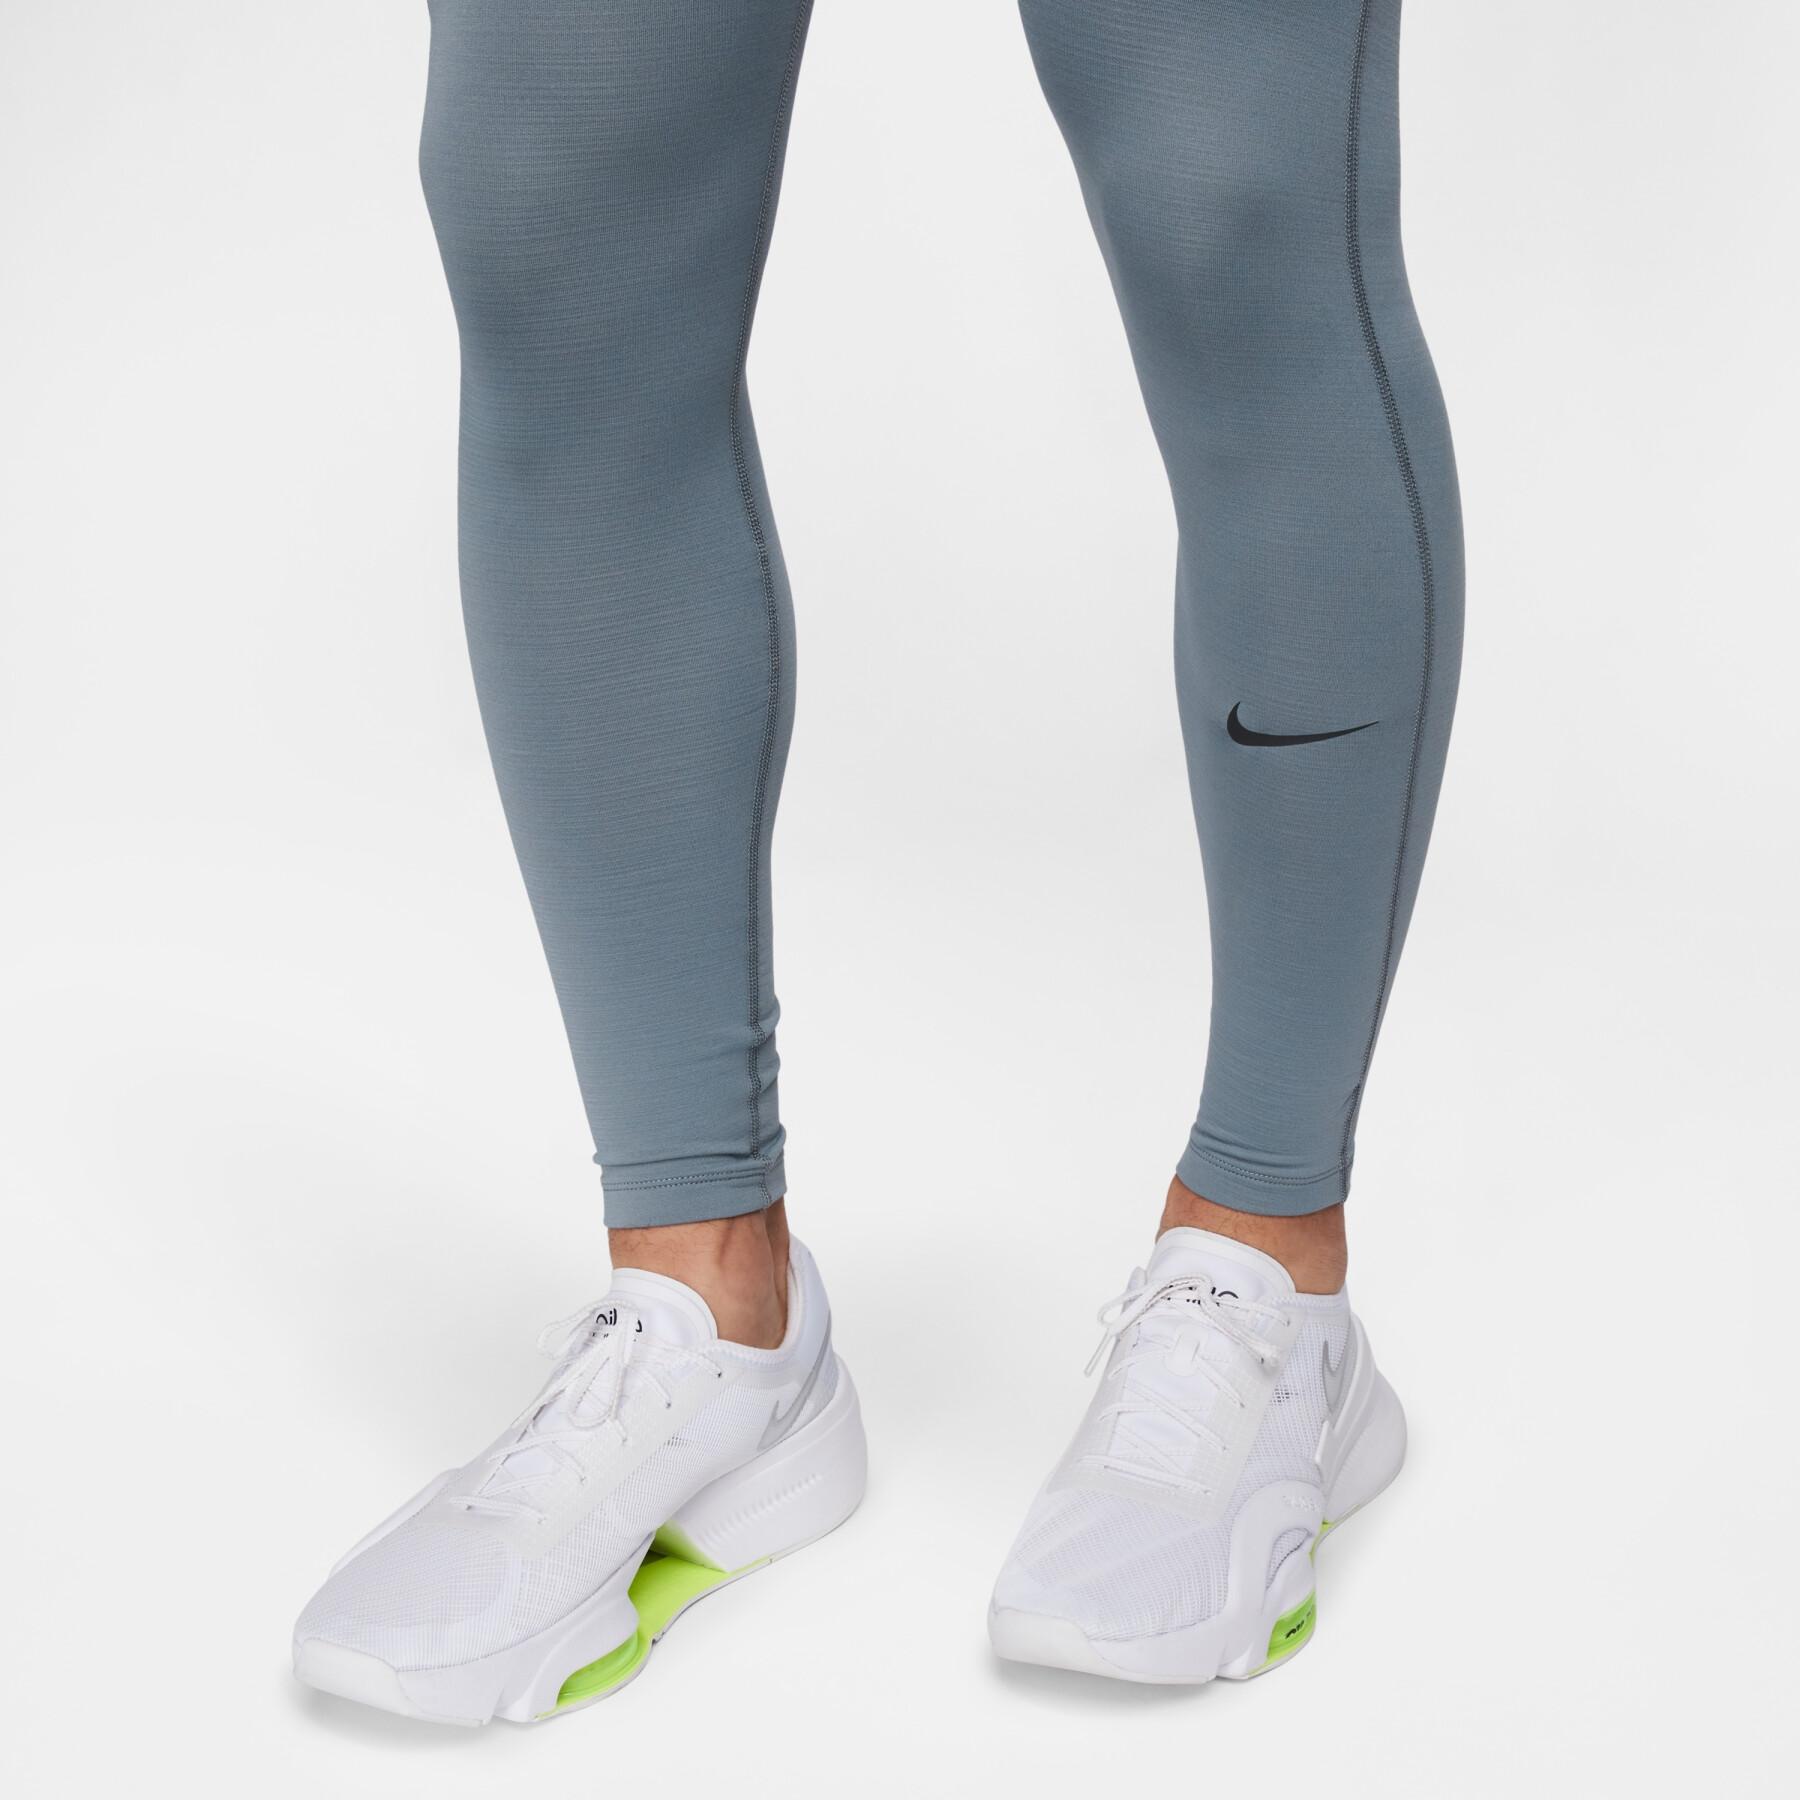 Legging Nike Pro Warm